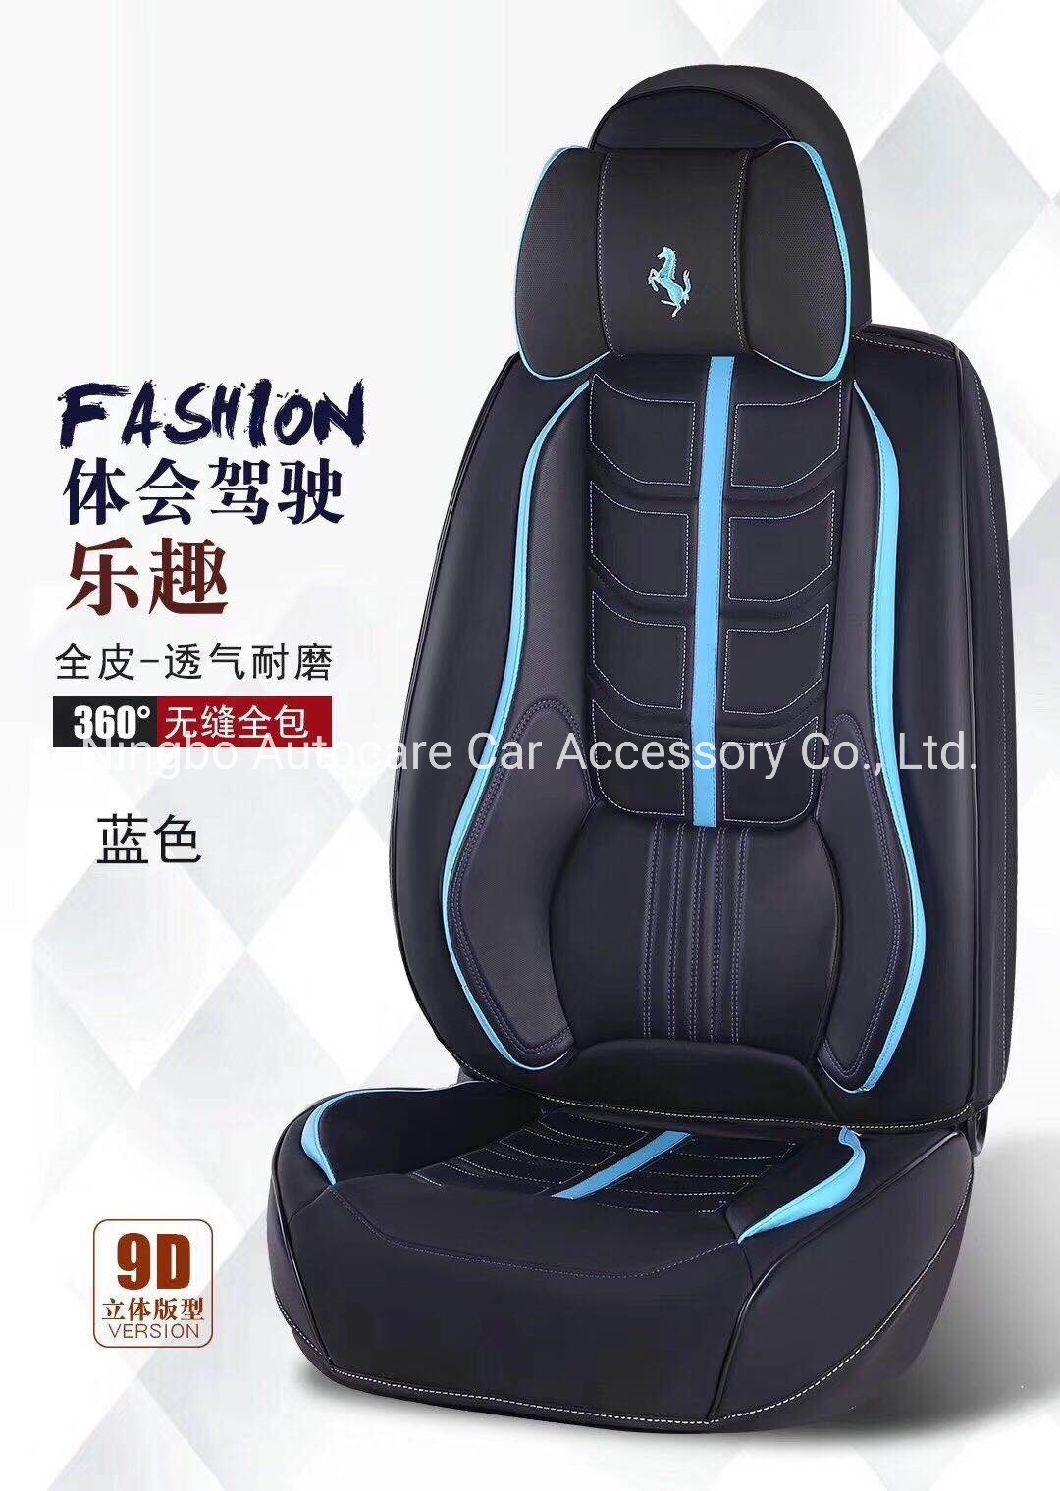 New Fashion 9d Car Seat Cushion High Quality New Fashion 9d Car Seat Cushion